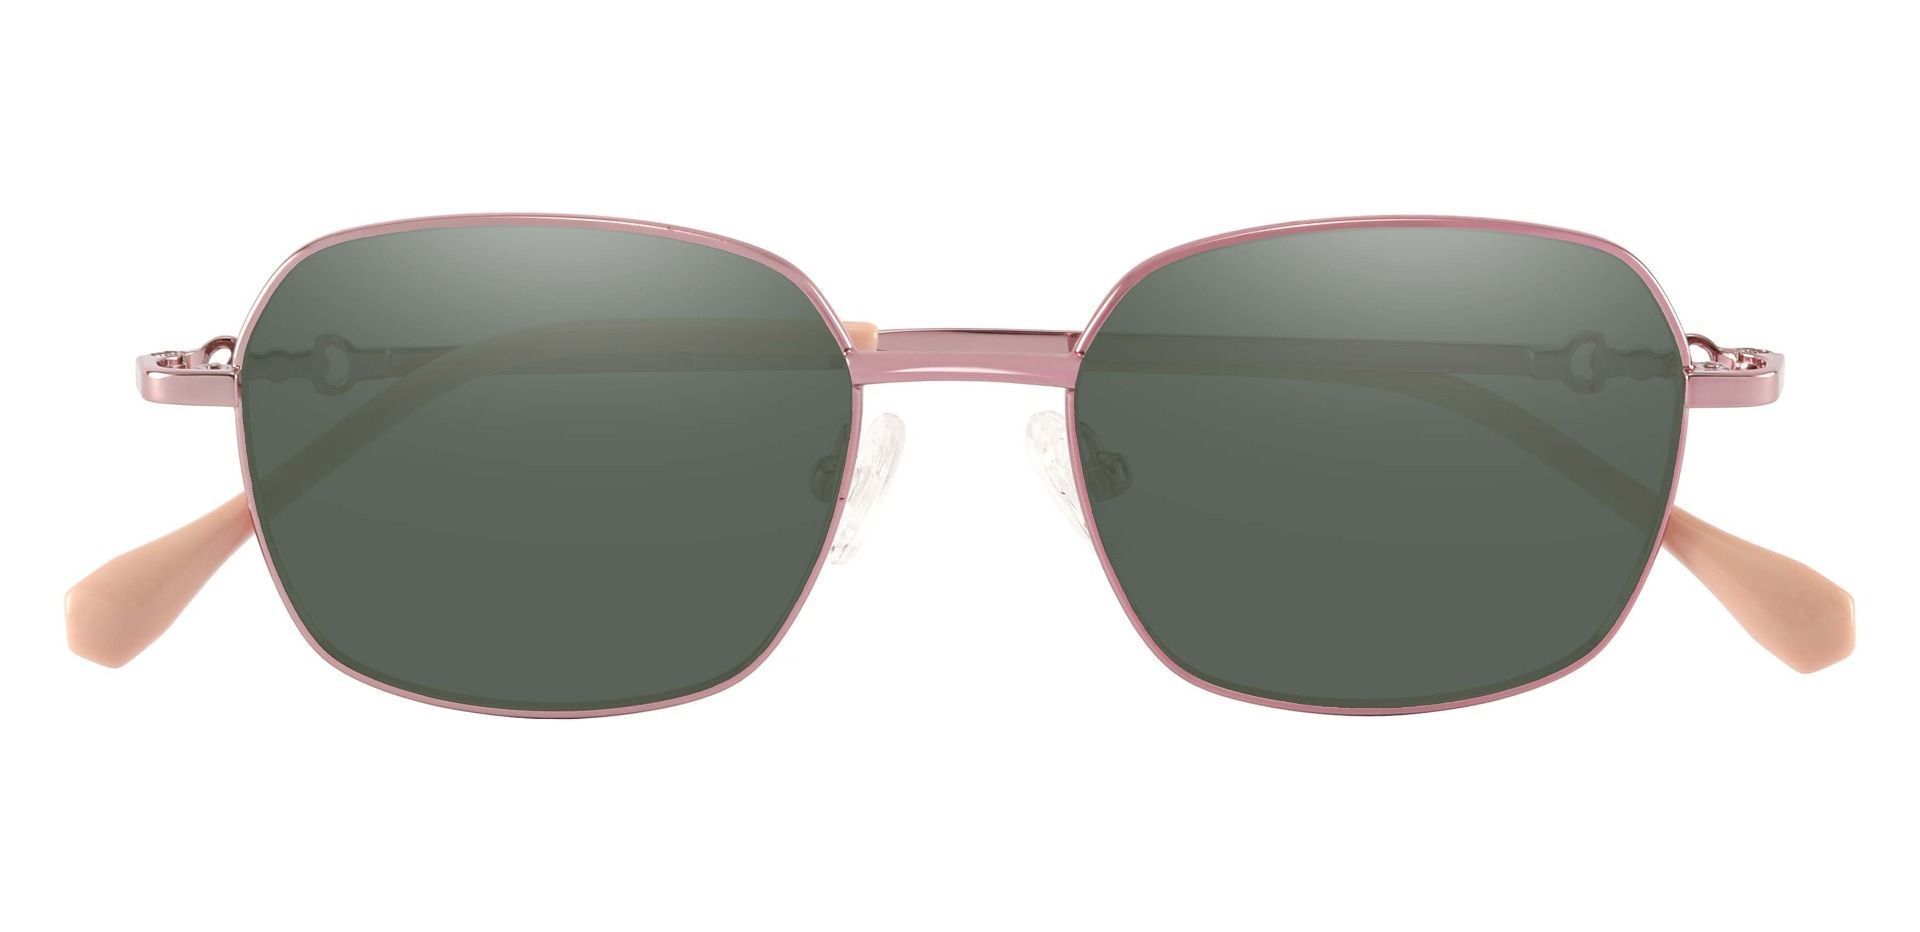 Averill Geometric Non-Rx Sunglasses - Rose Gold Frame With Green Lenses